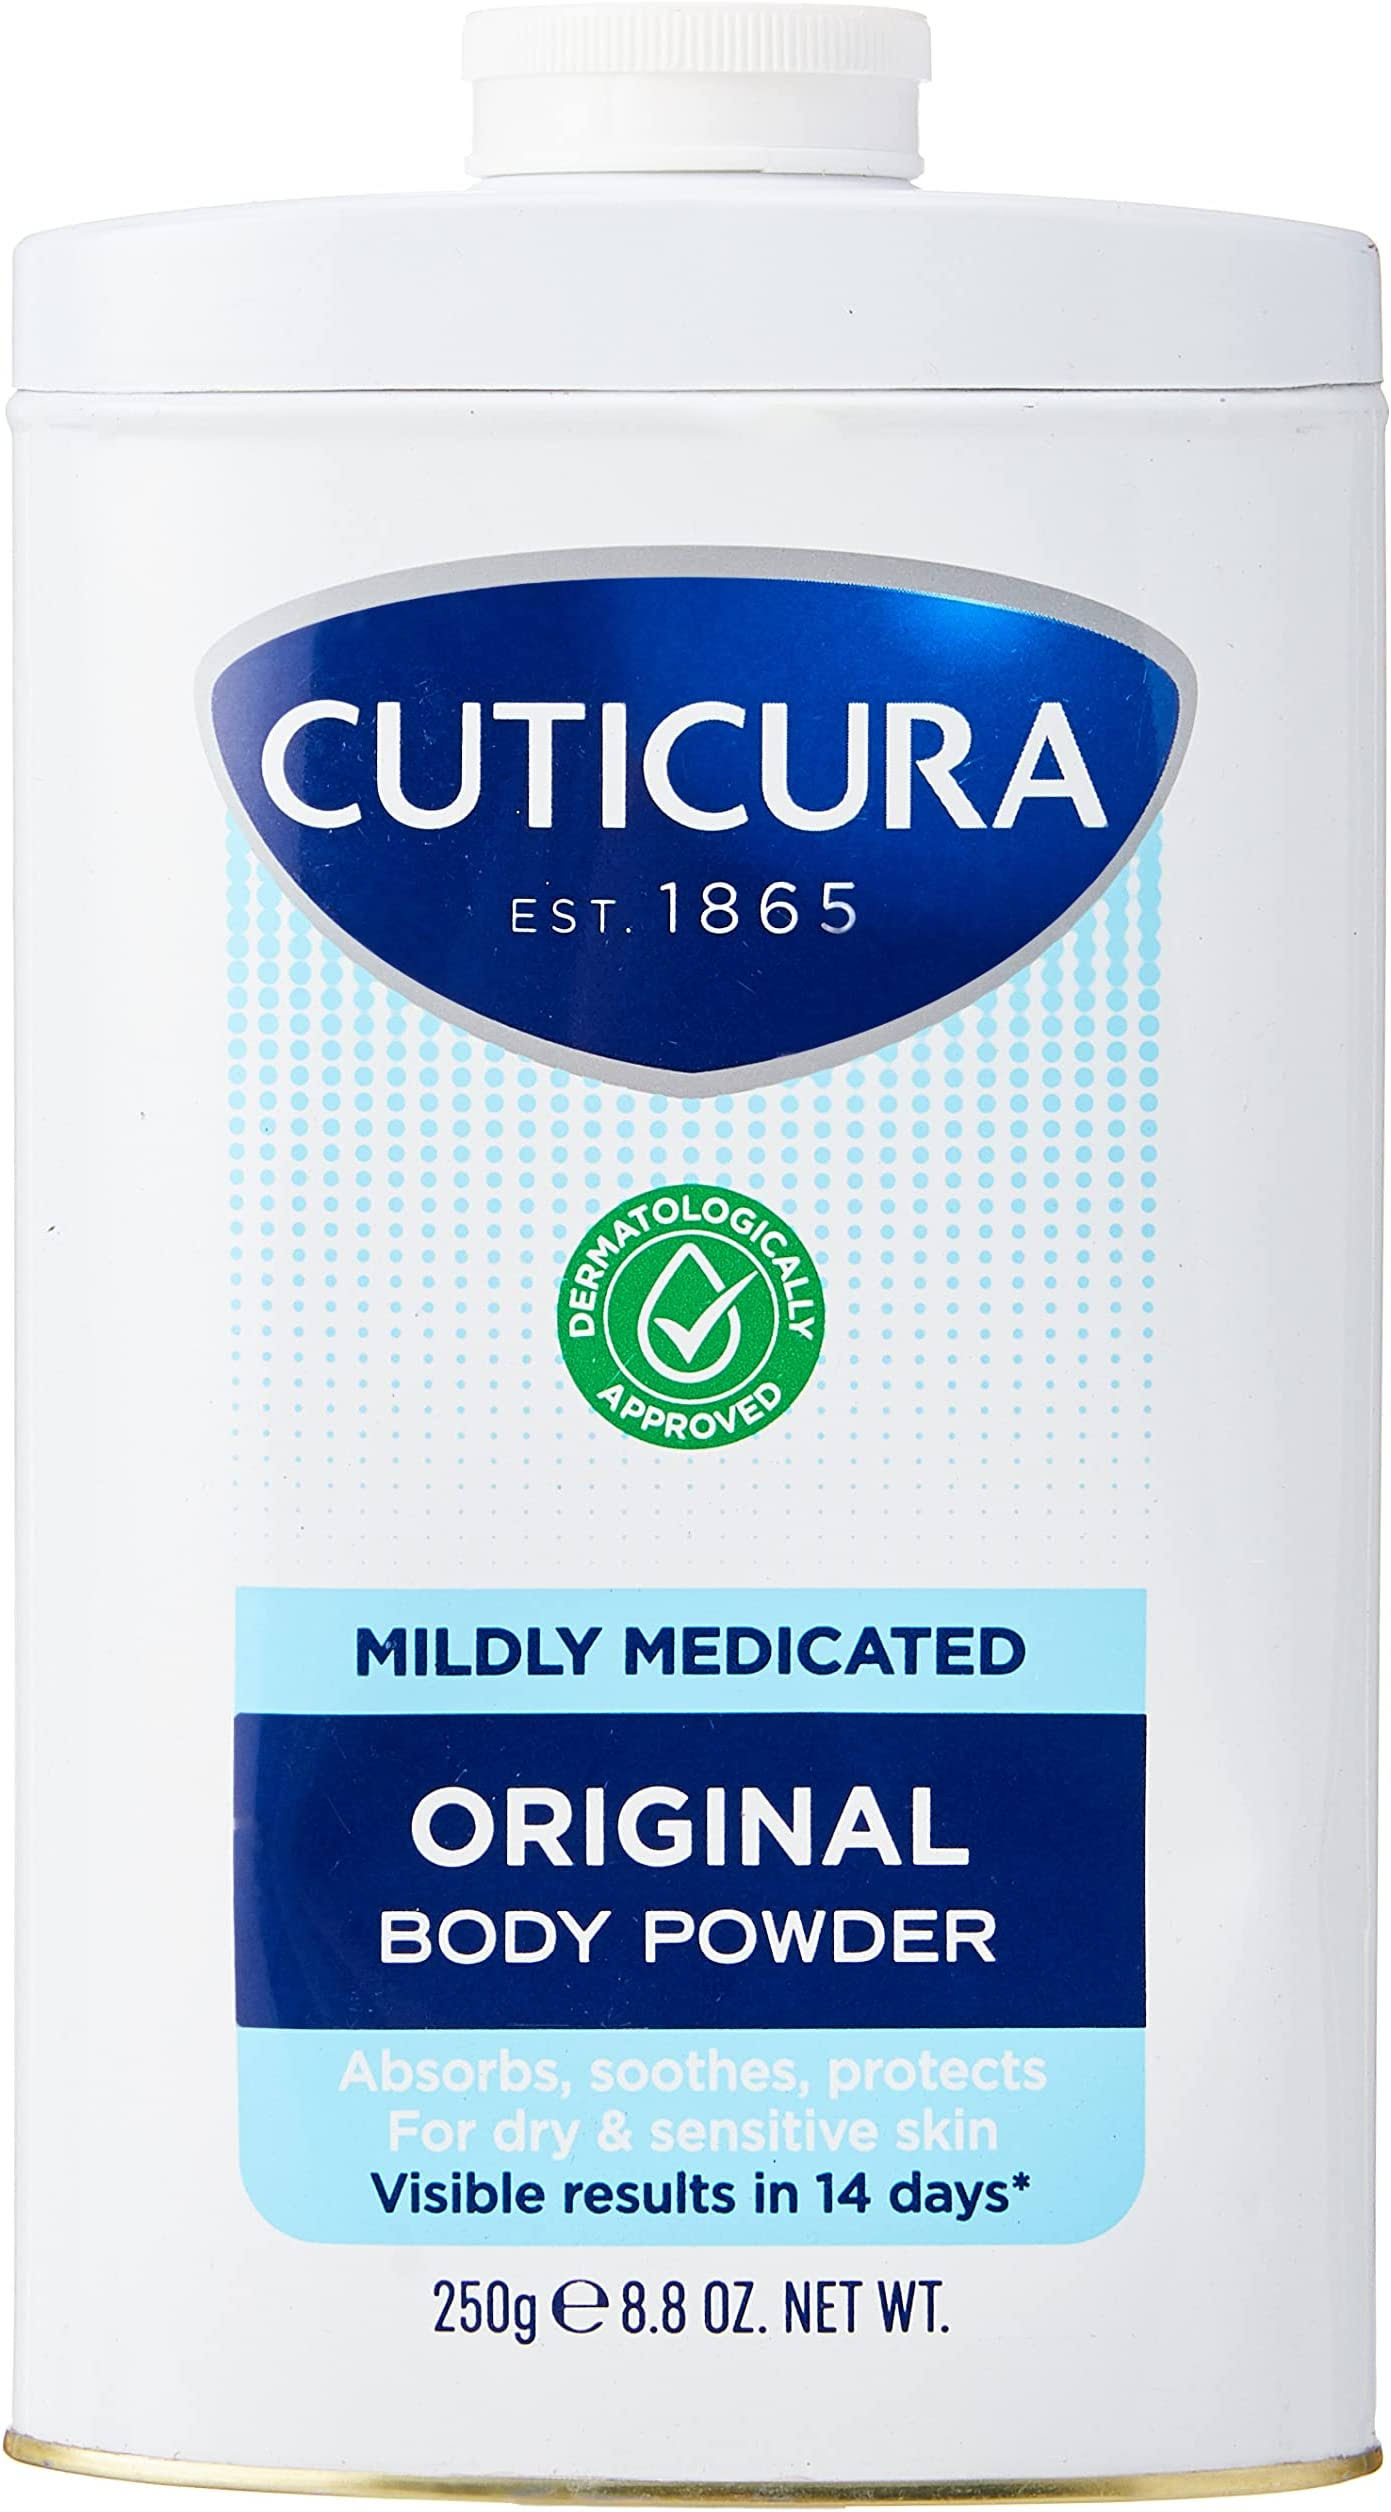 Cuticura Talcum Powder - 250g, Mildly Medicated